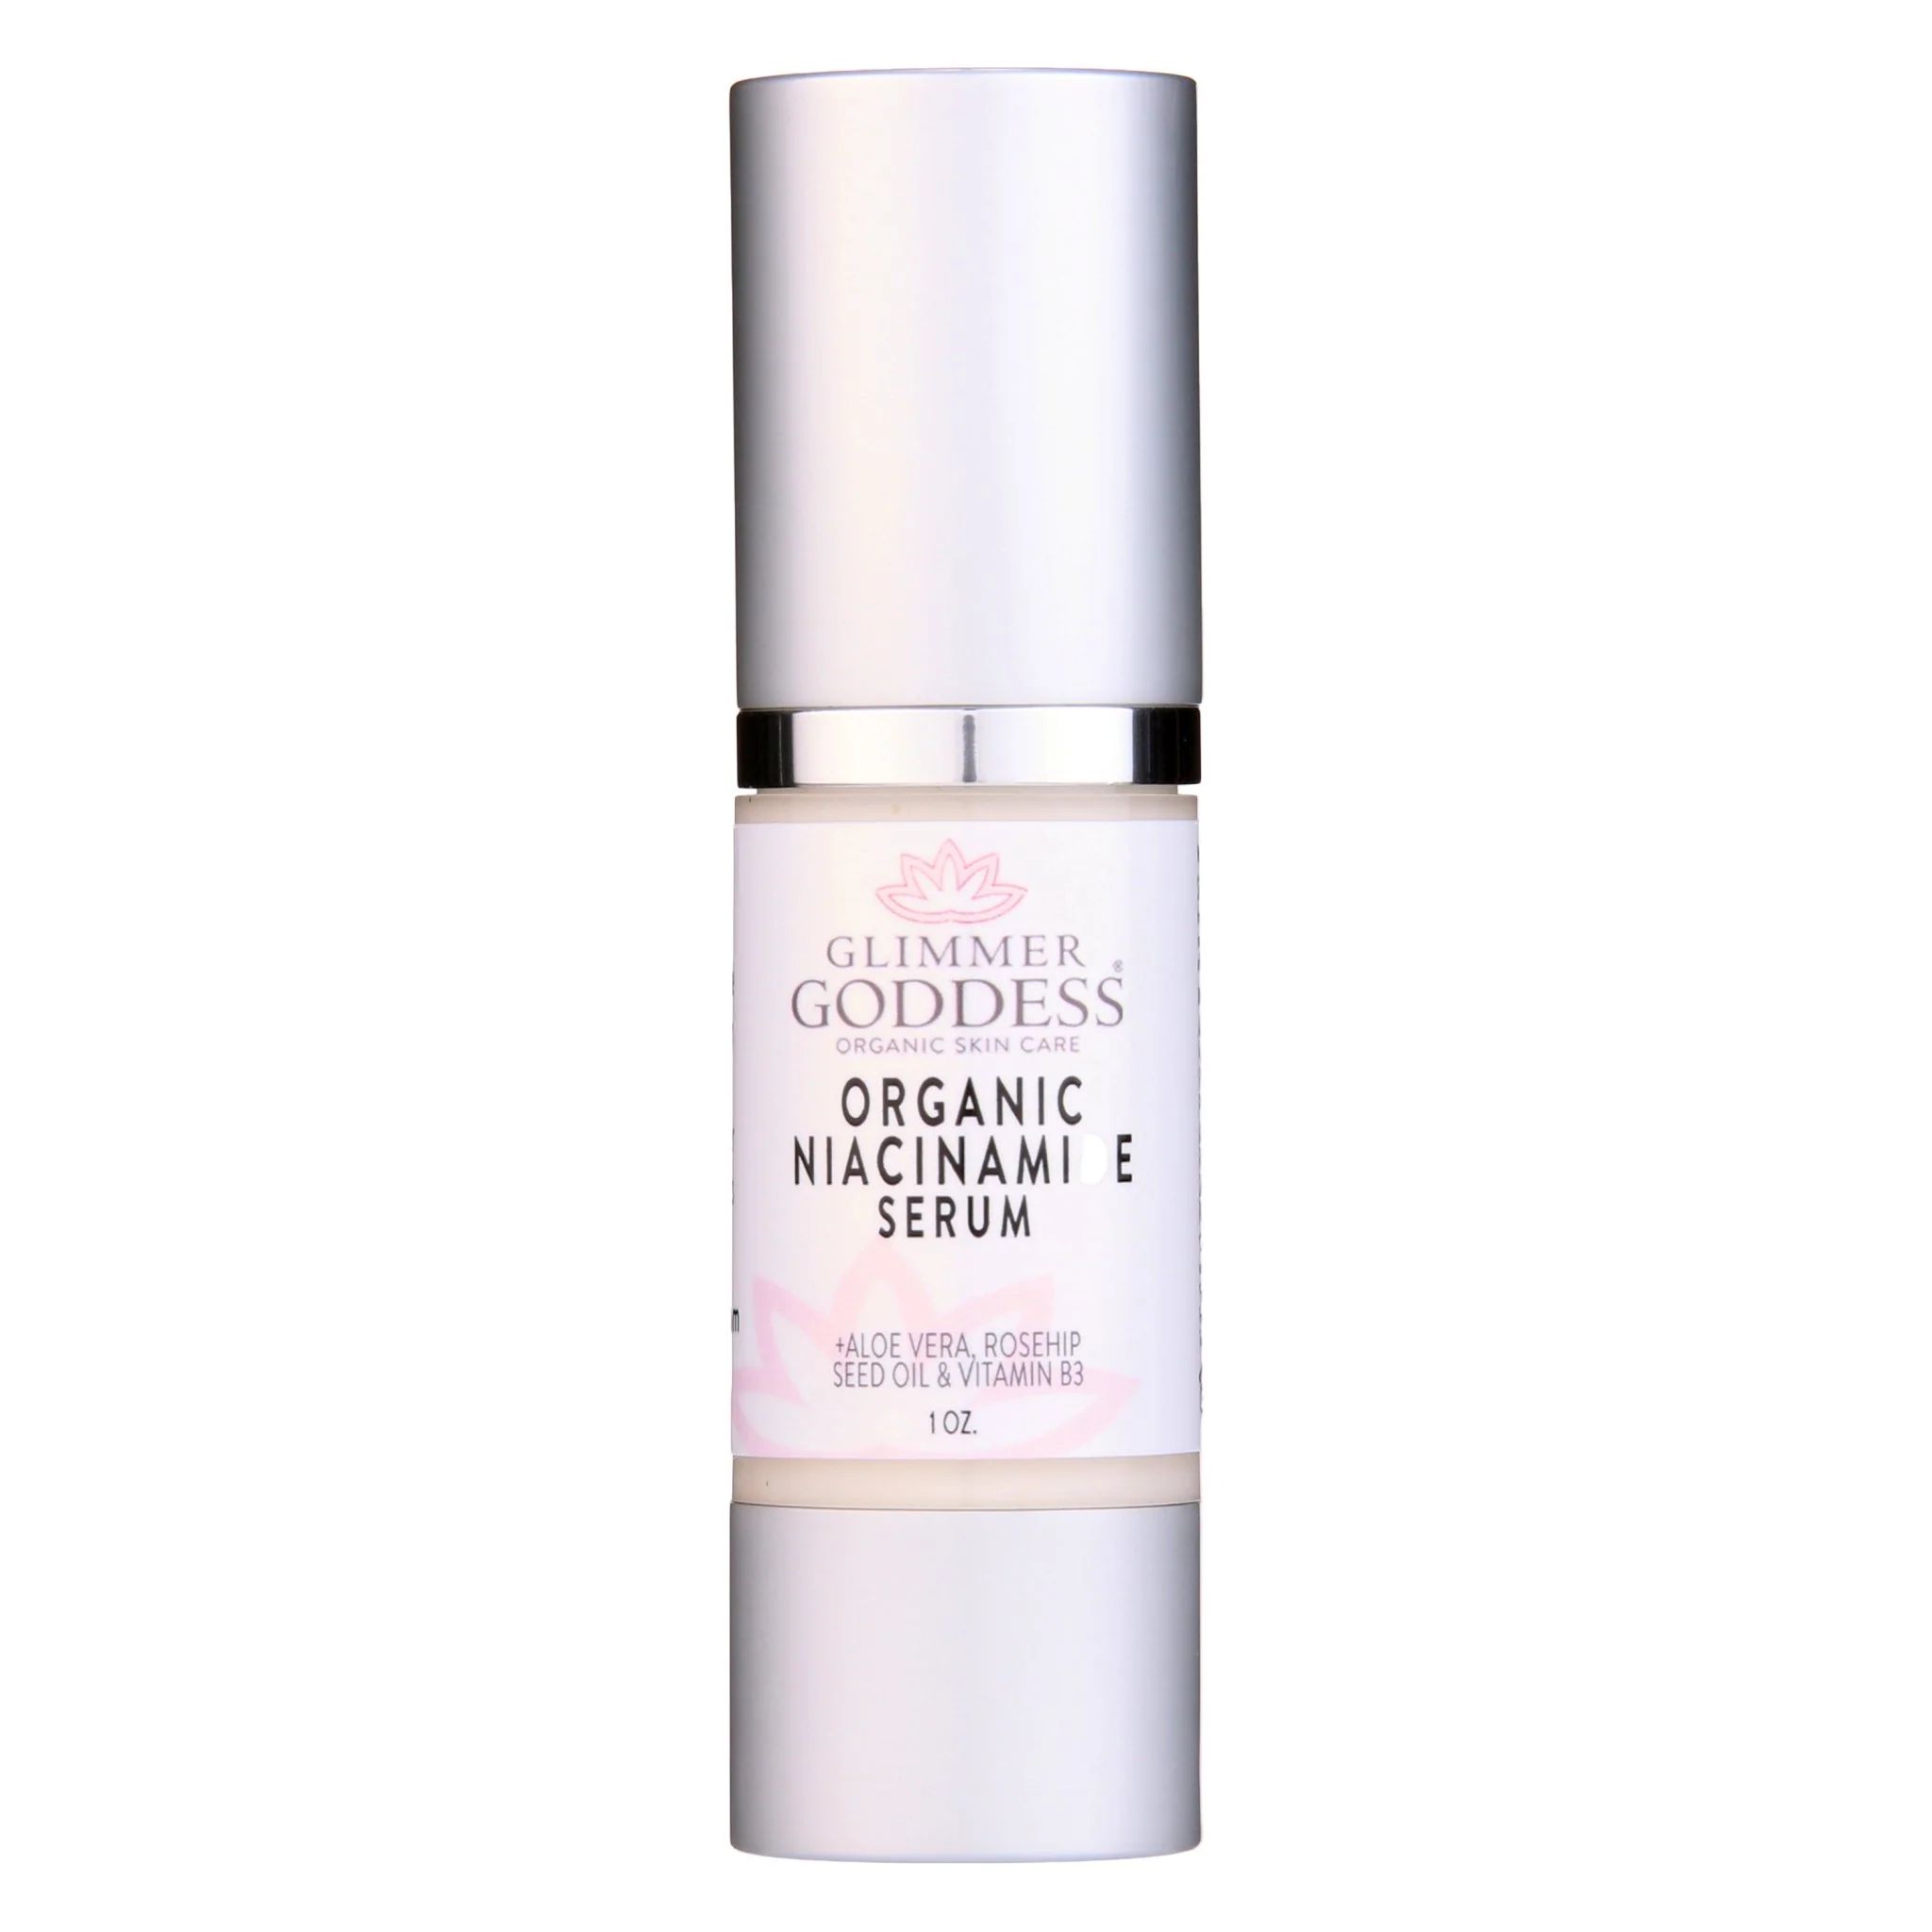 Organic Niacinamide Anti Aging Serum - Tightens Pores, Reduces Wrinkles | Glimmer Goddess